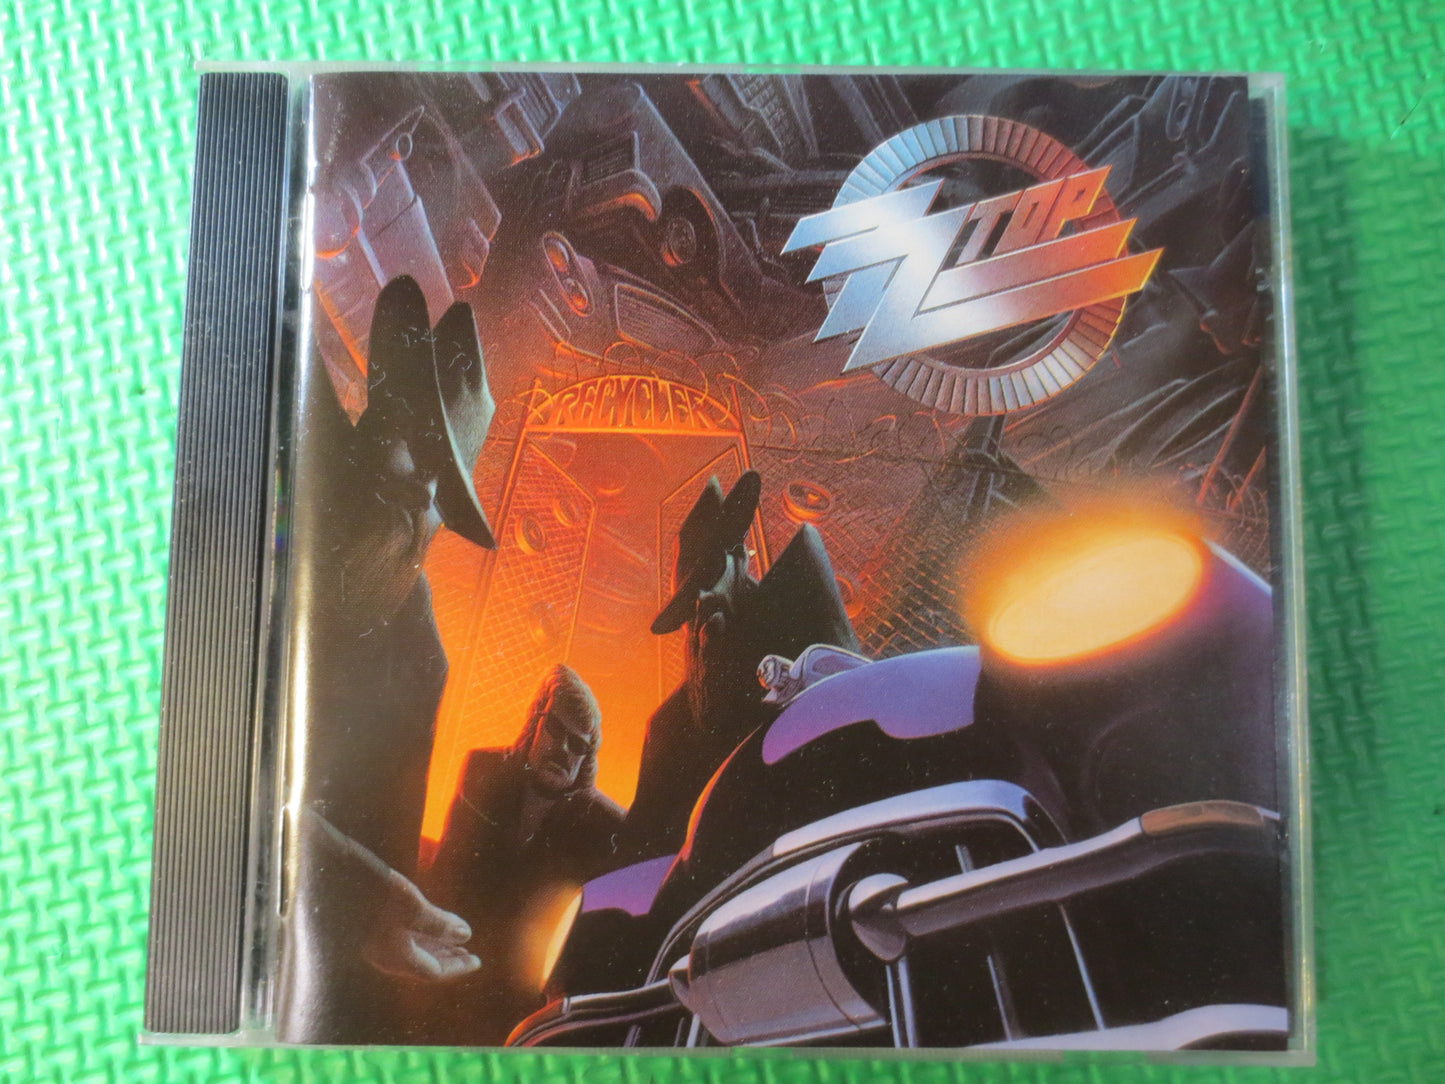 ZZ Top, Recycler, ZZ Top Cd, ZZ Top Compact Disc, Zz Top Album,  Zz Top Lp, Rock Cd, Classic Rock Cd, 1990 Compact Discs